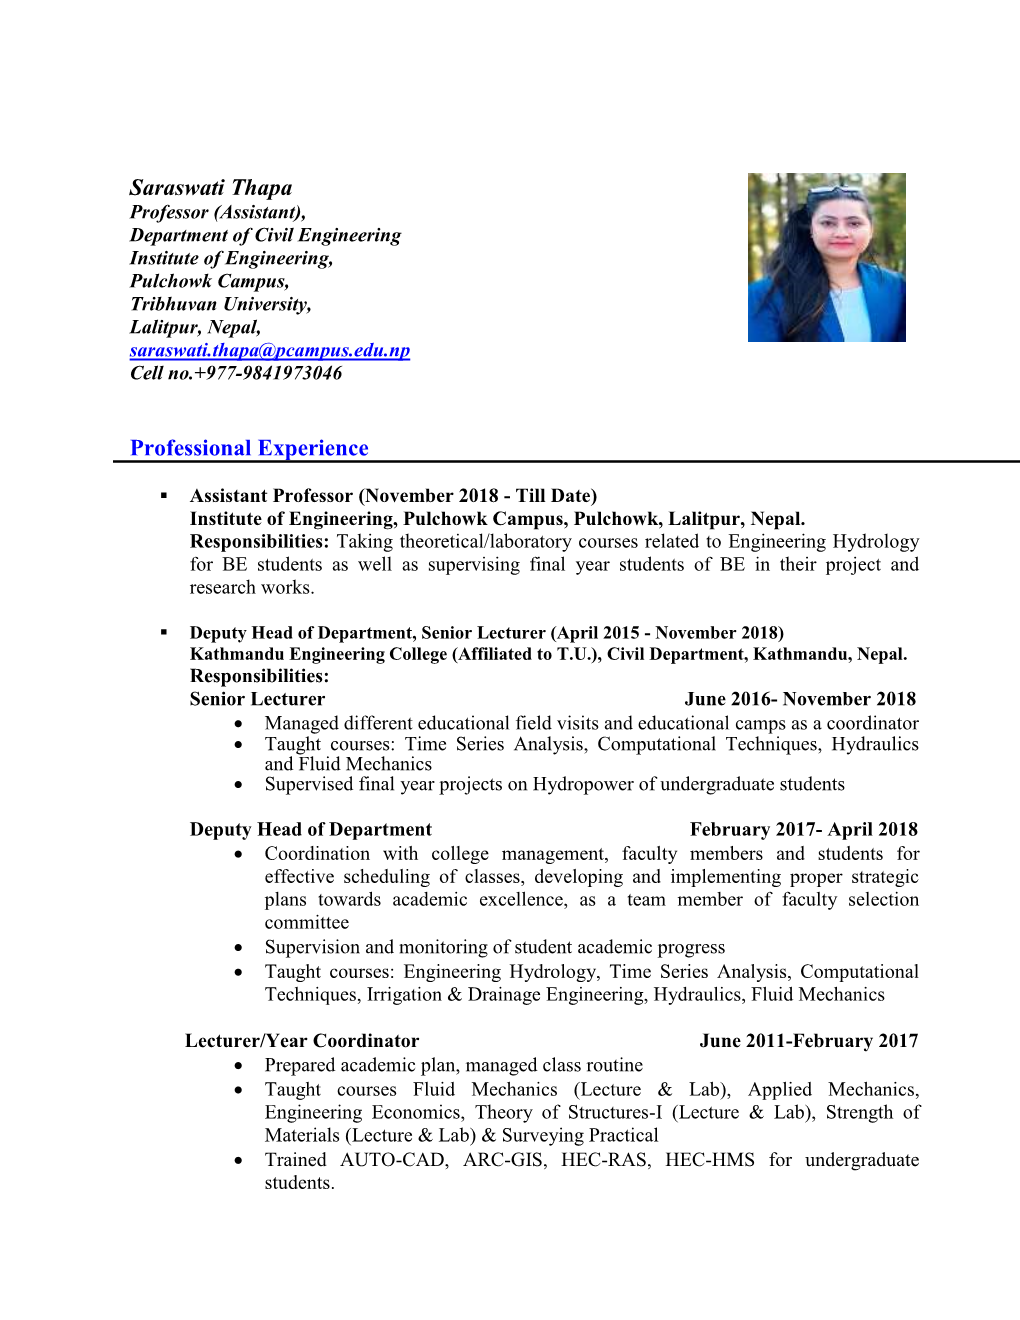 Saraswati Thapa Professional Experience